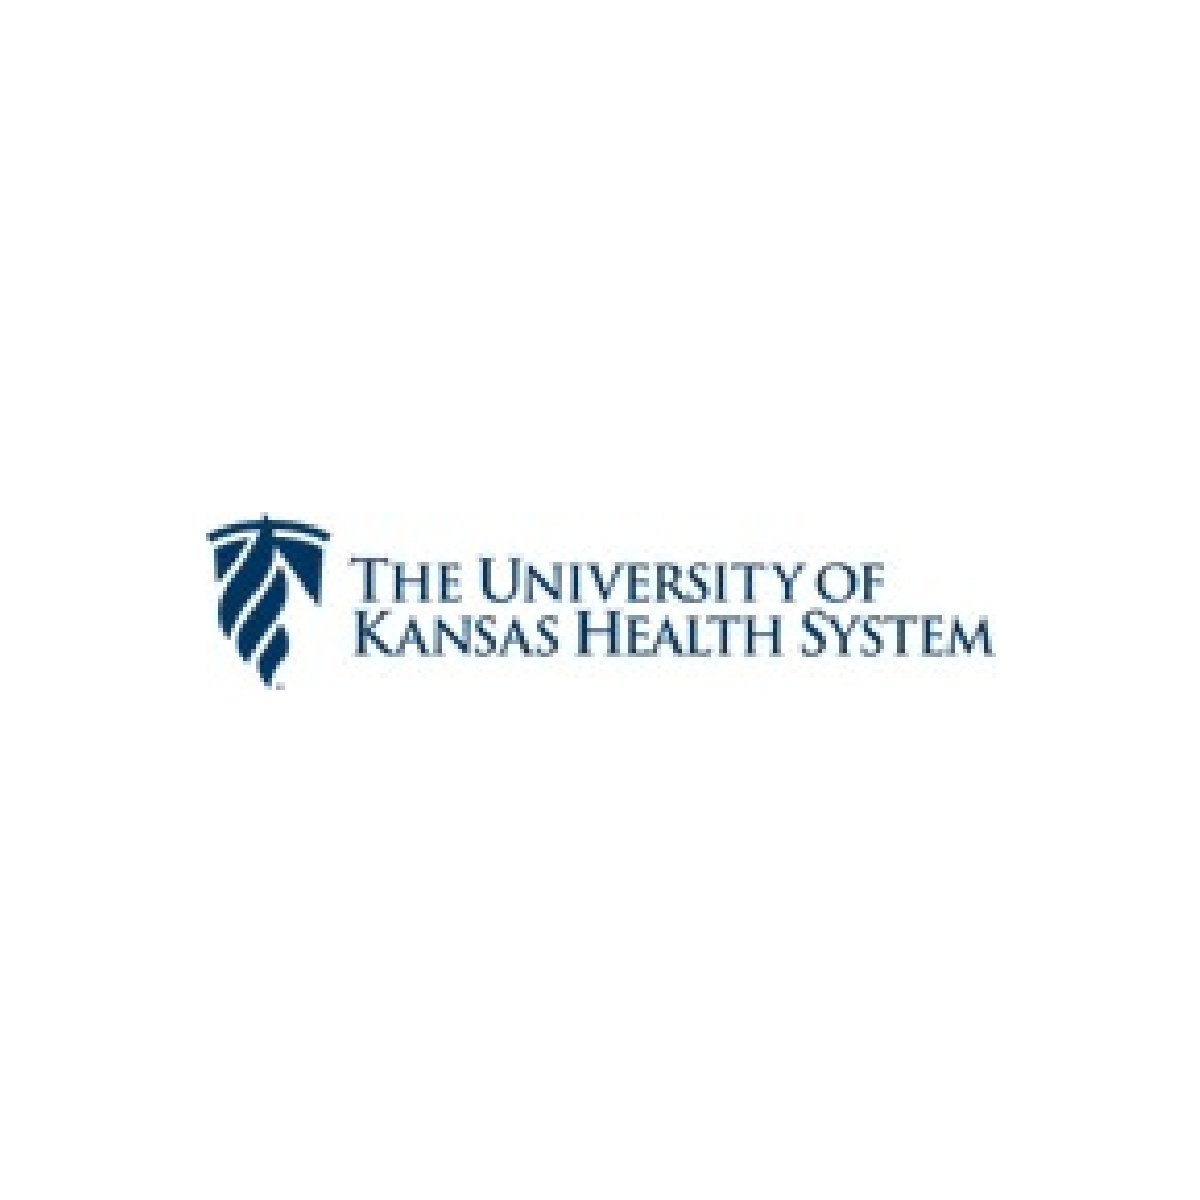 The University of Kansas Health System logo